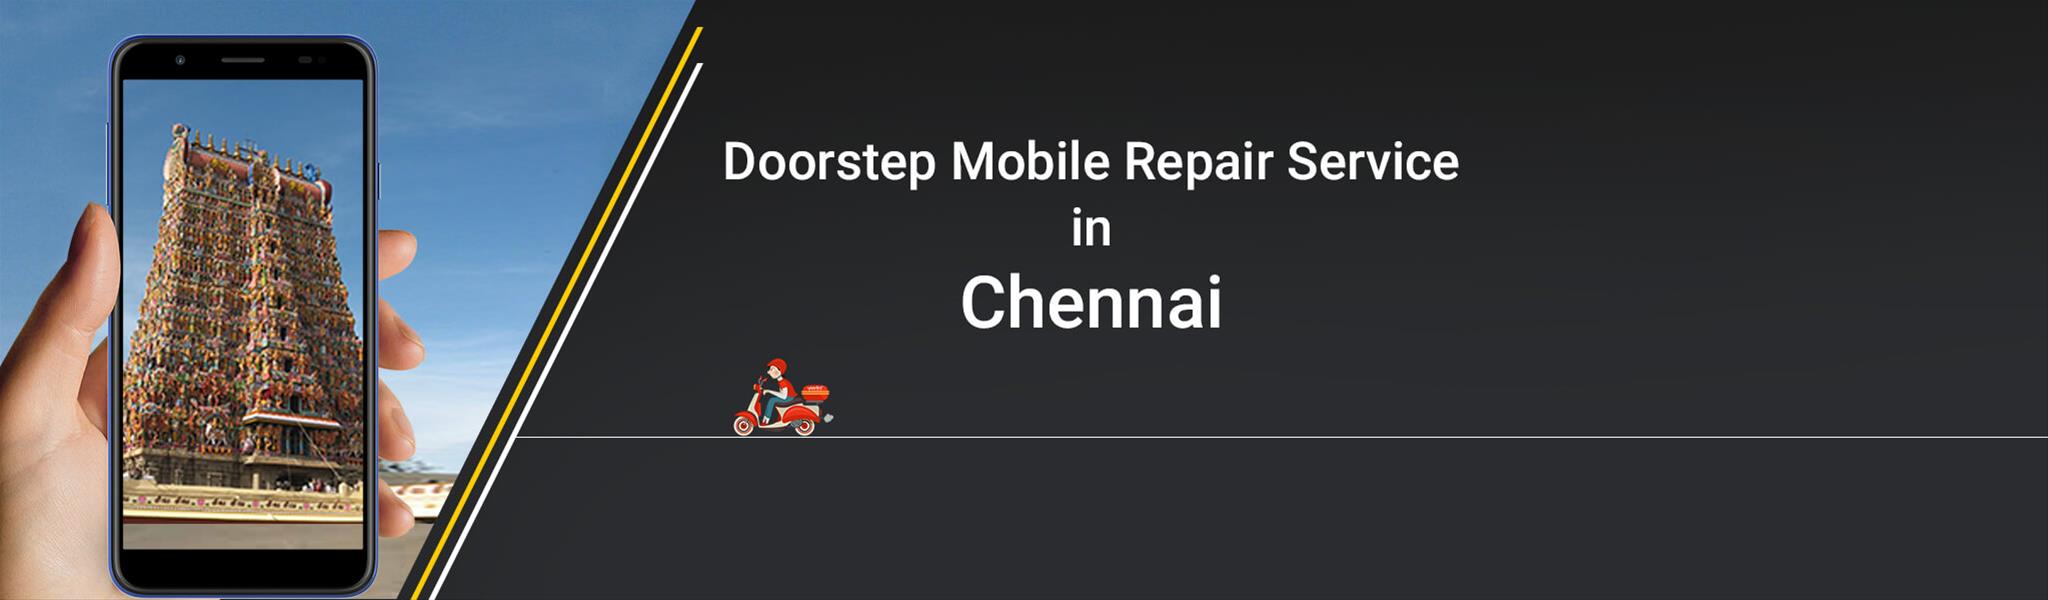 mobile-repair-in-chennai.jpg